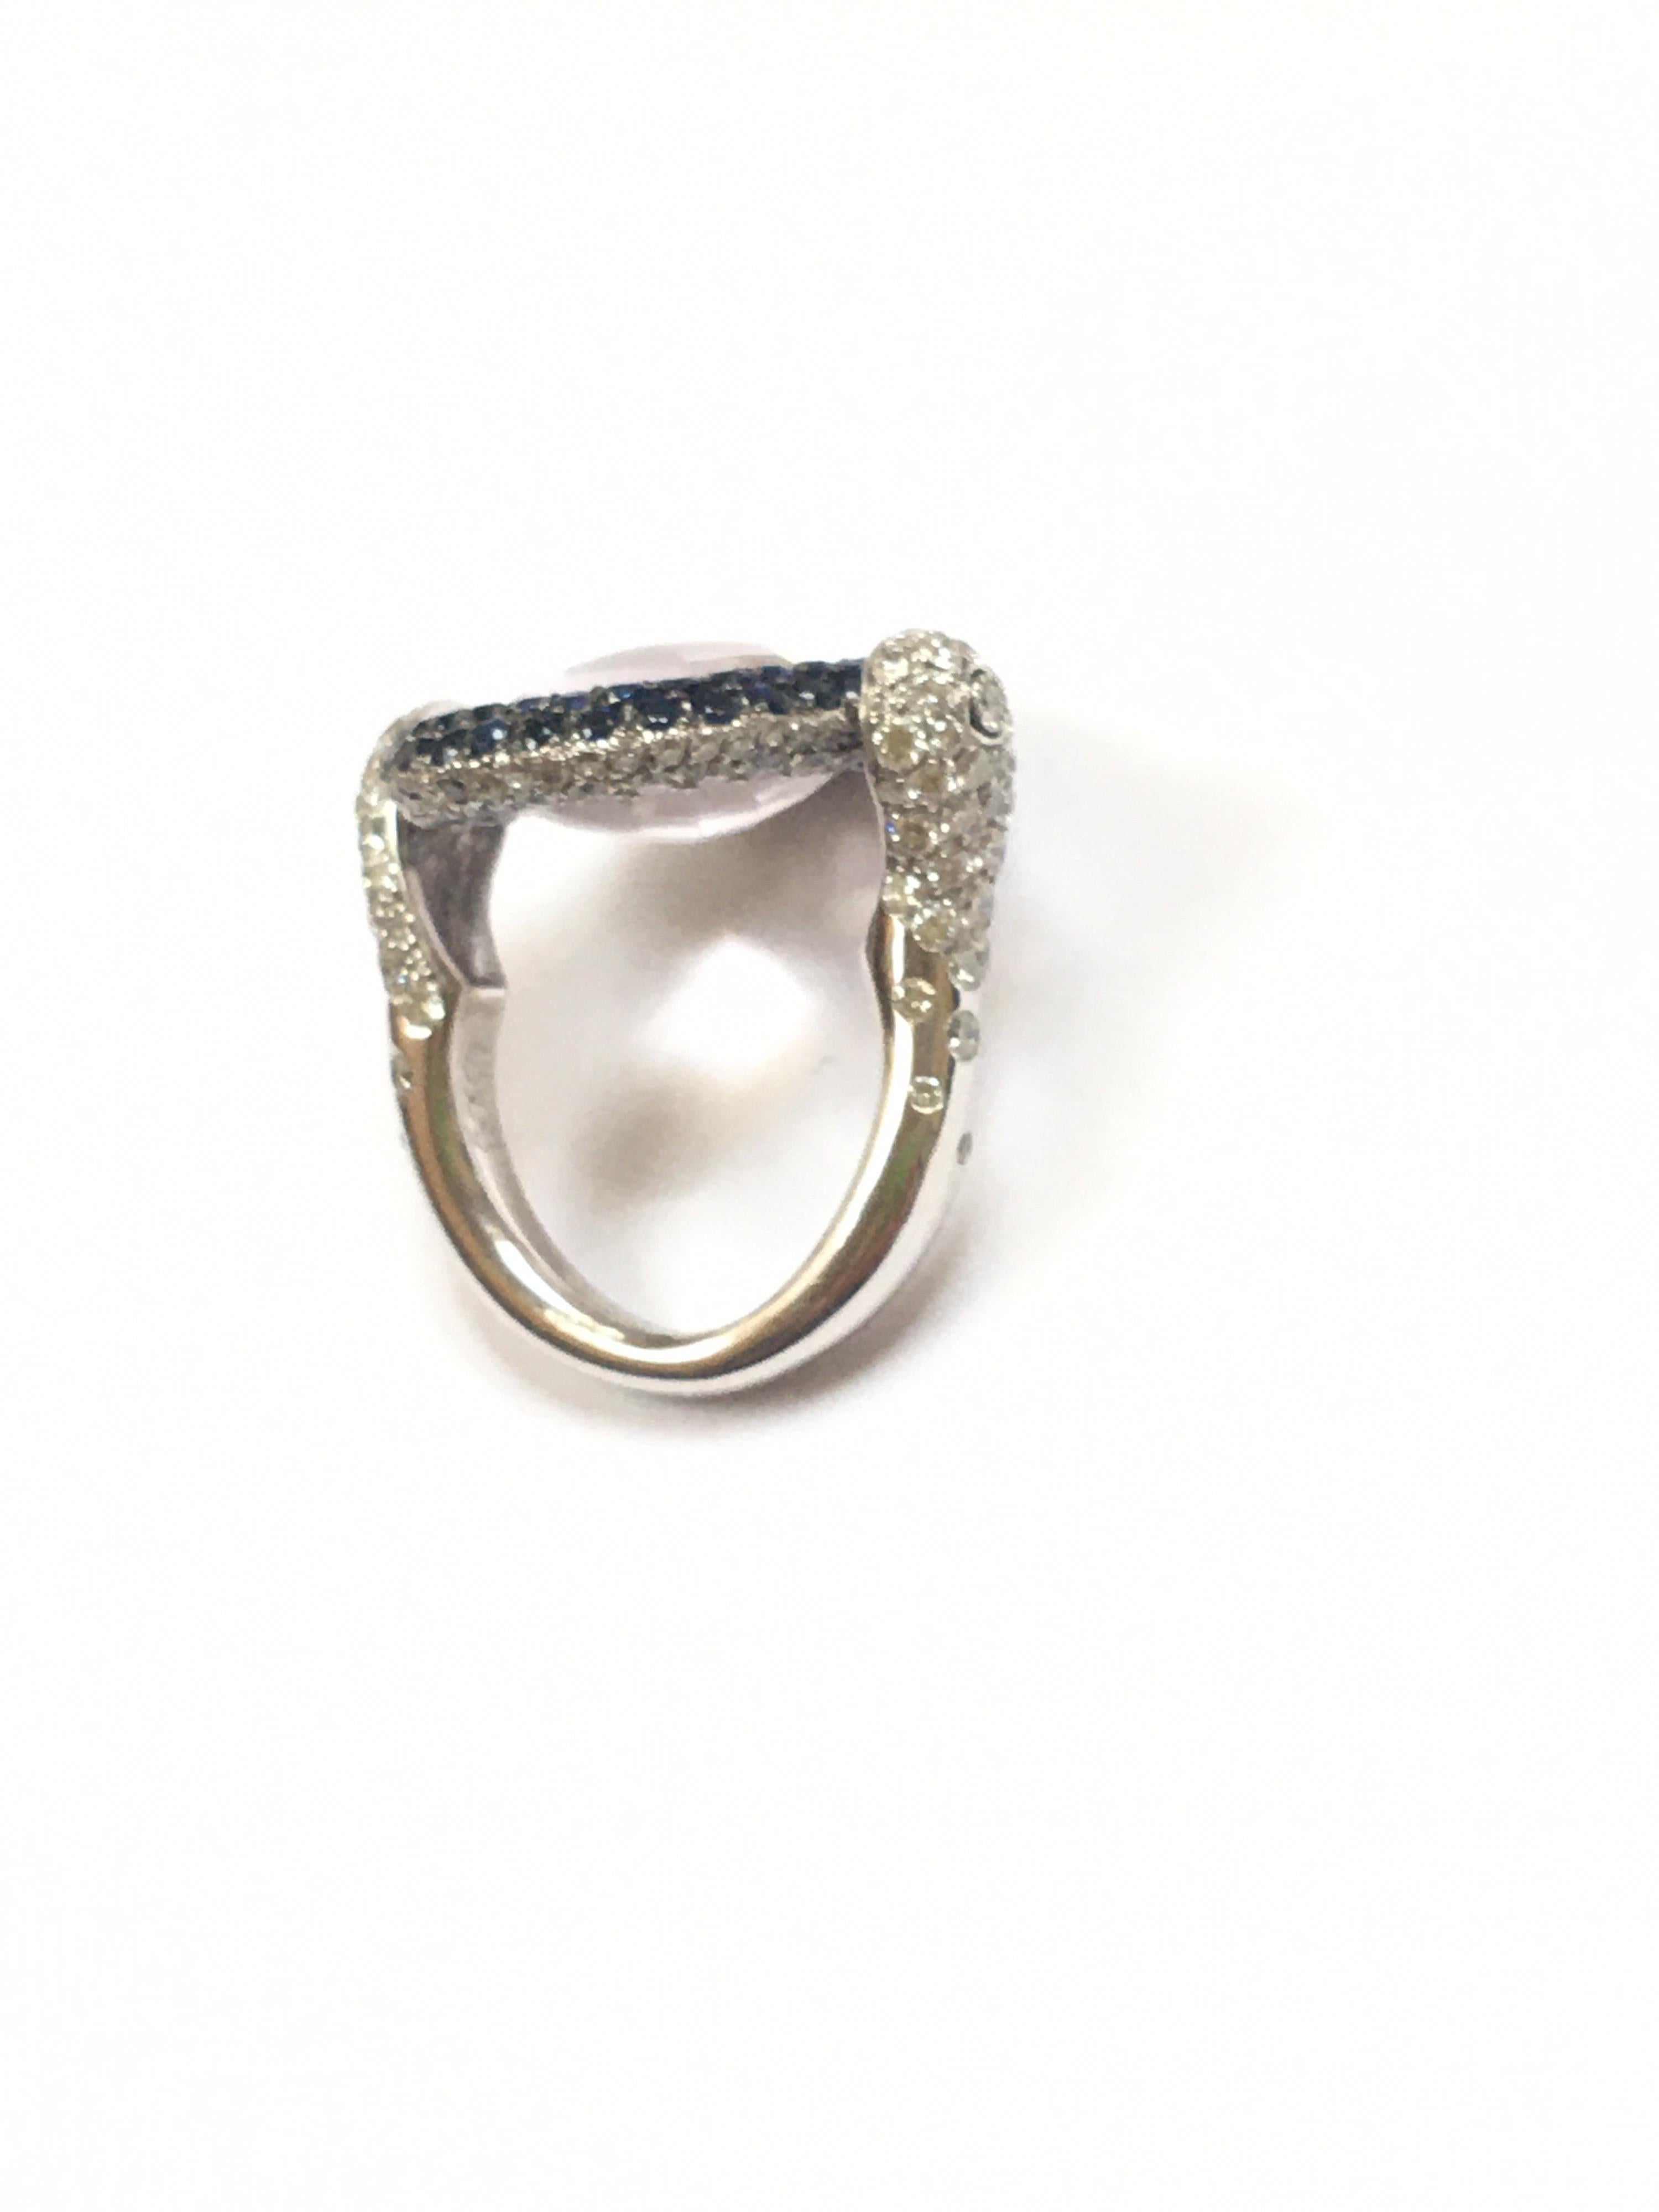 Diamond Sapphire Kunzite Rotating Ring de Grisogono 18 Karat White Gold 2